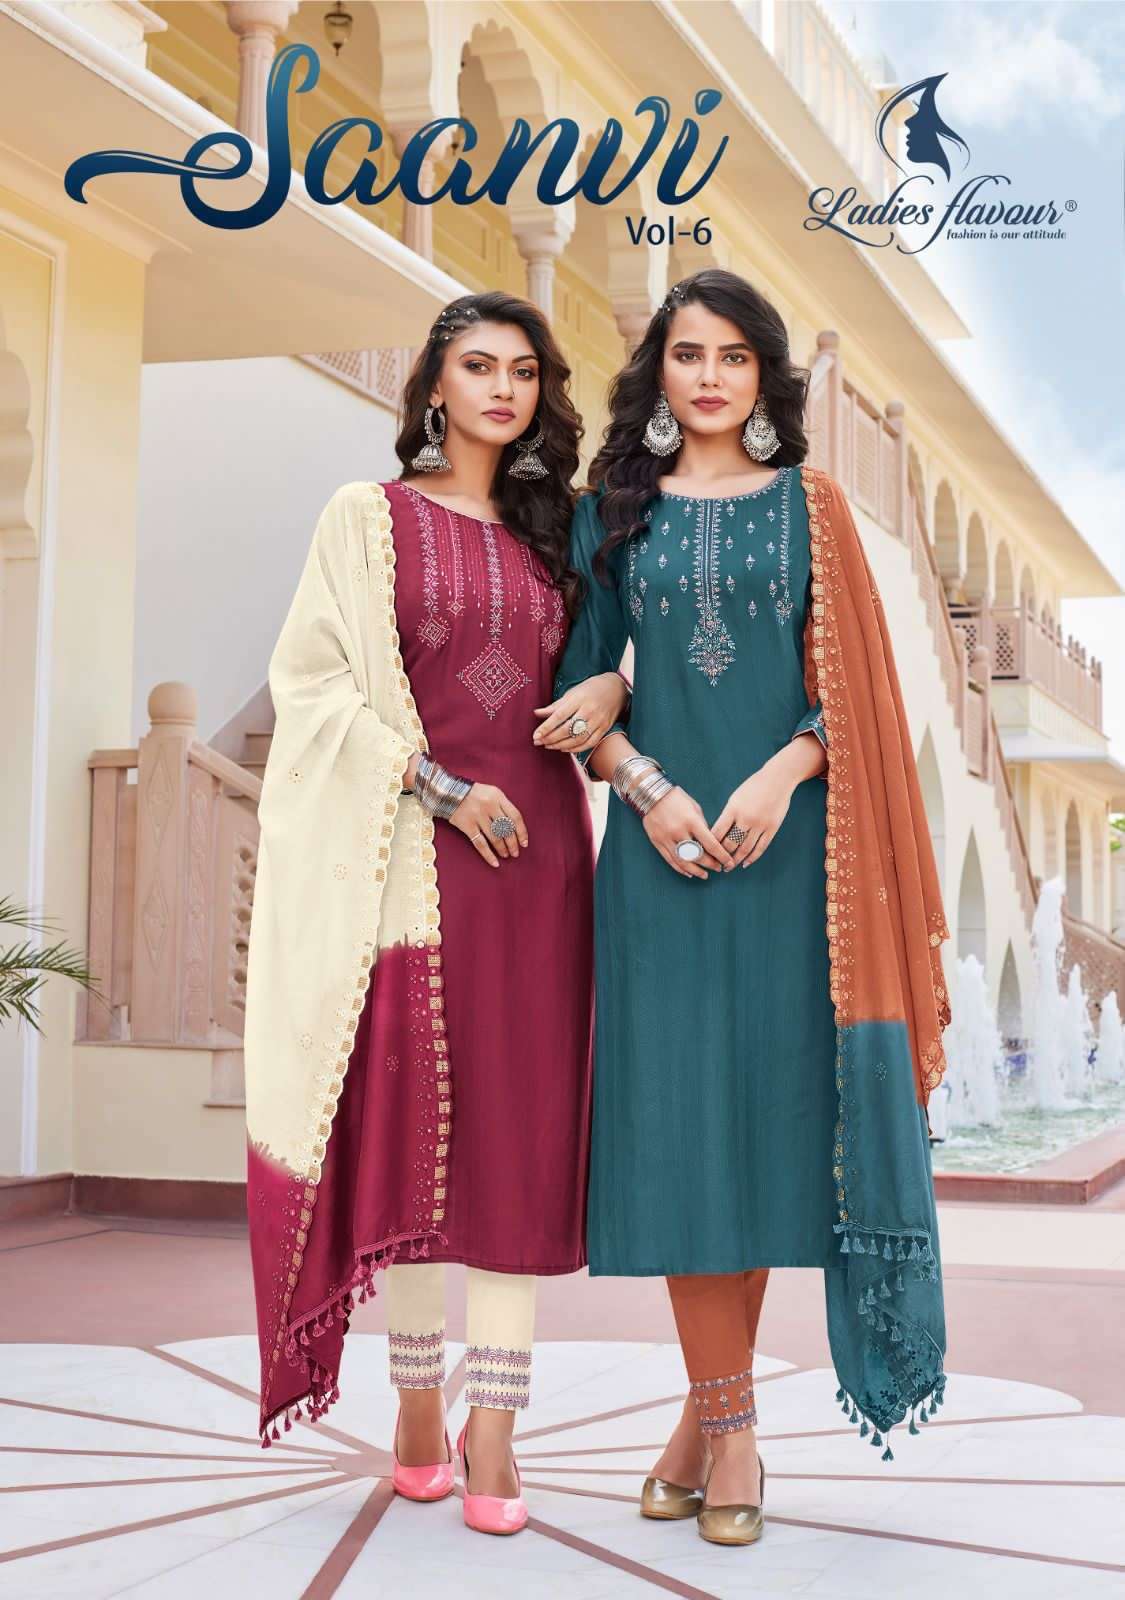 Ladies flavour presents Saanvi vol-6 Pure Rayon designer kurtis with pant and dupatta collection 